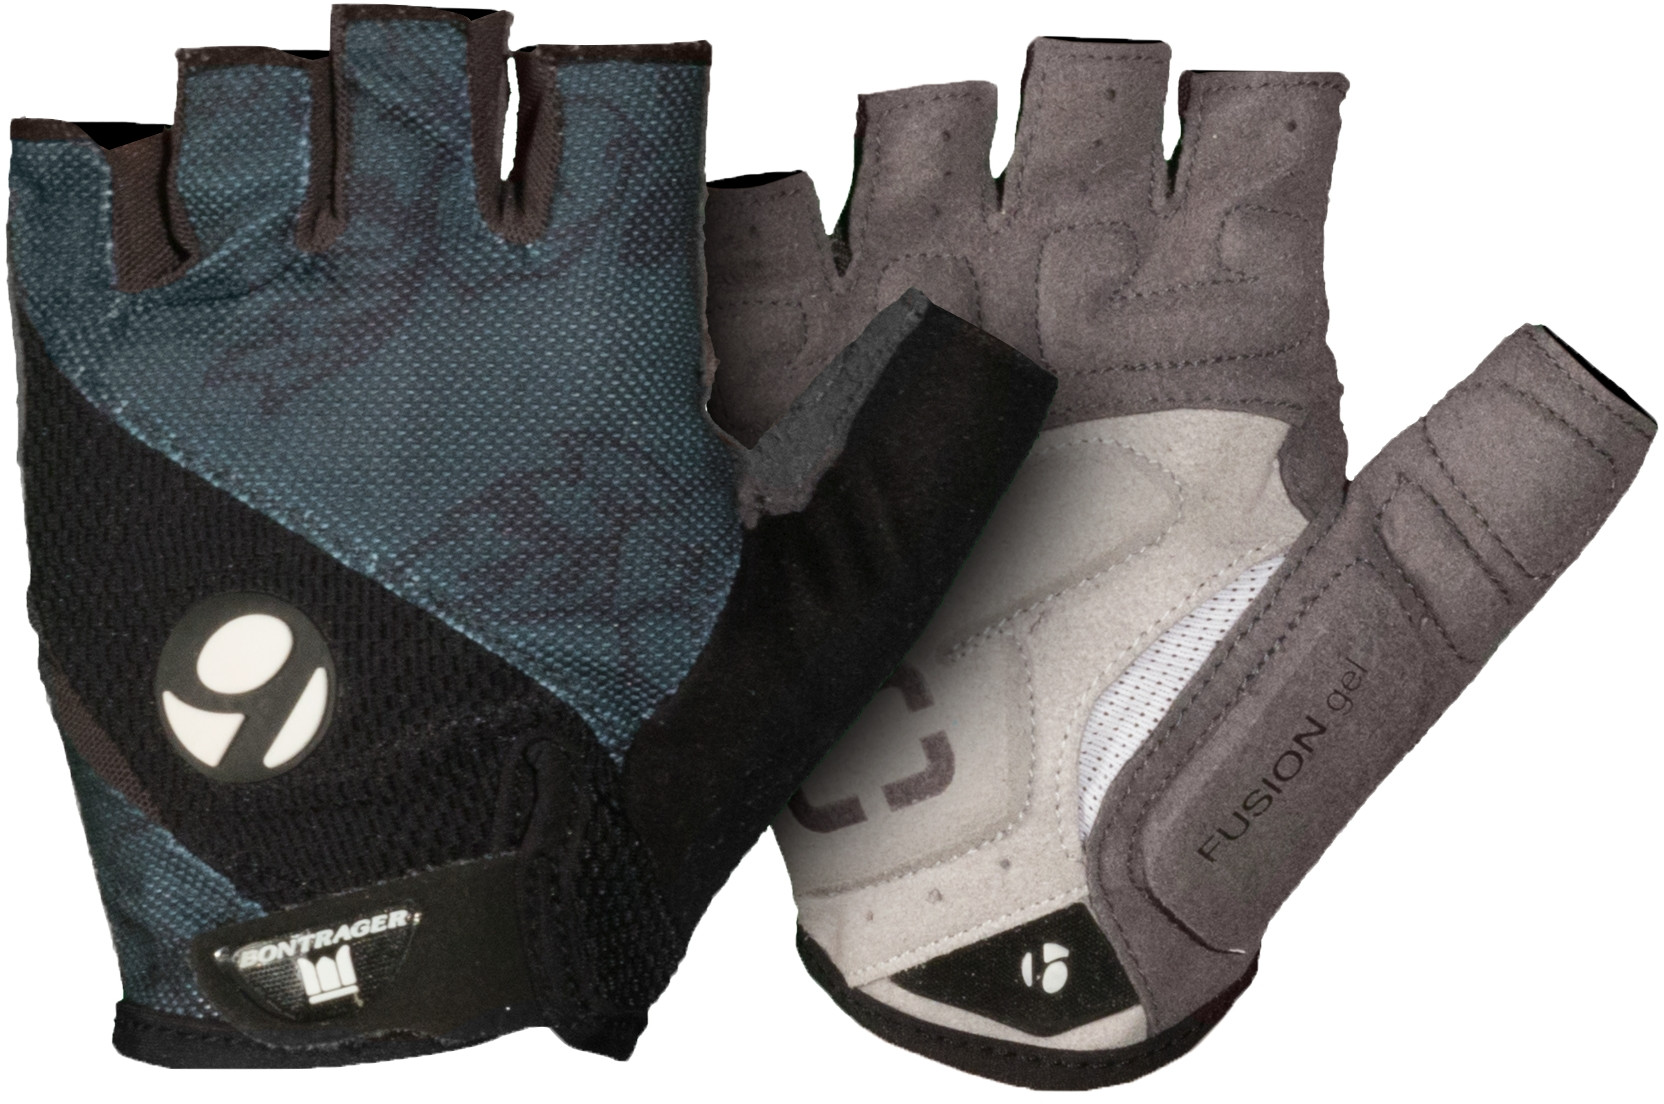 Bontrager Race Gel Women's Cycling Glove - Womens - Gloves - Clothing ...